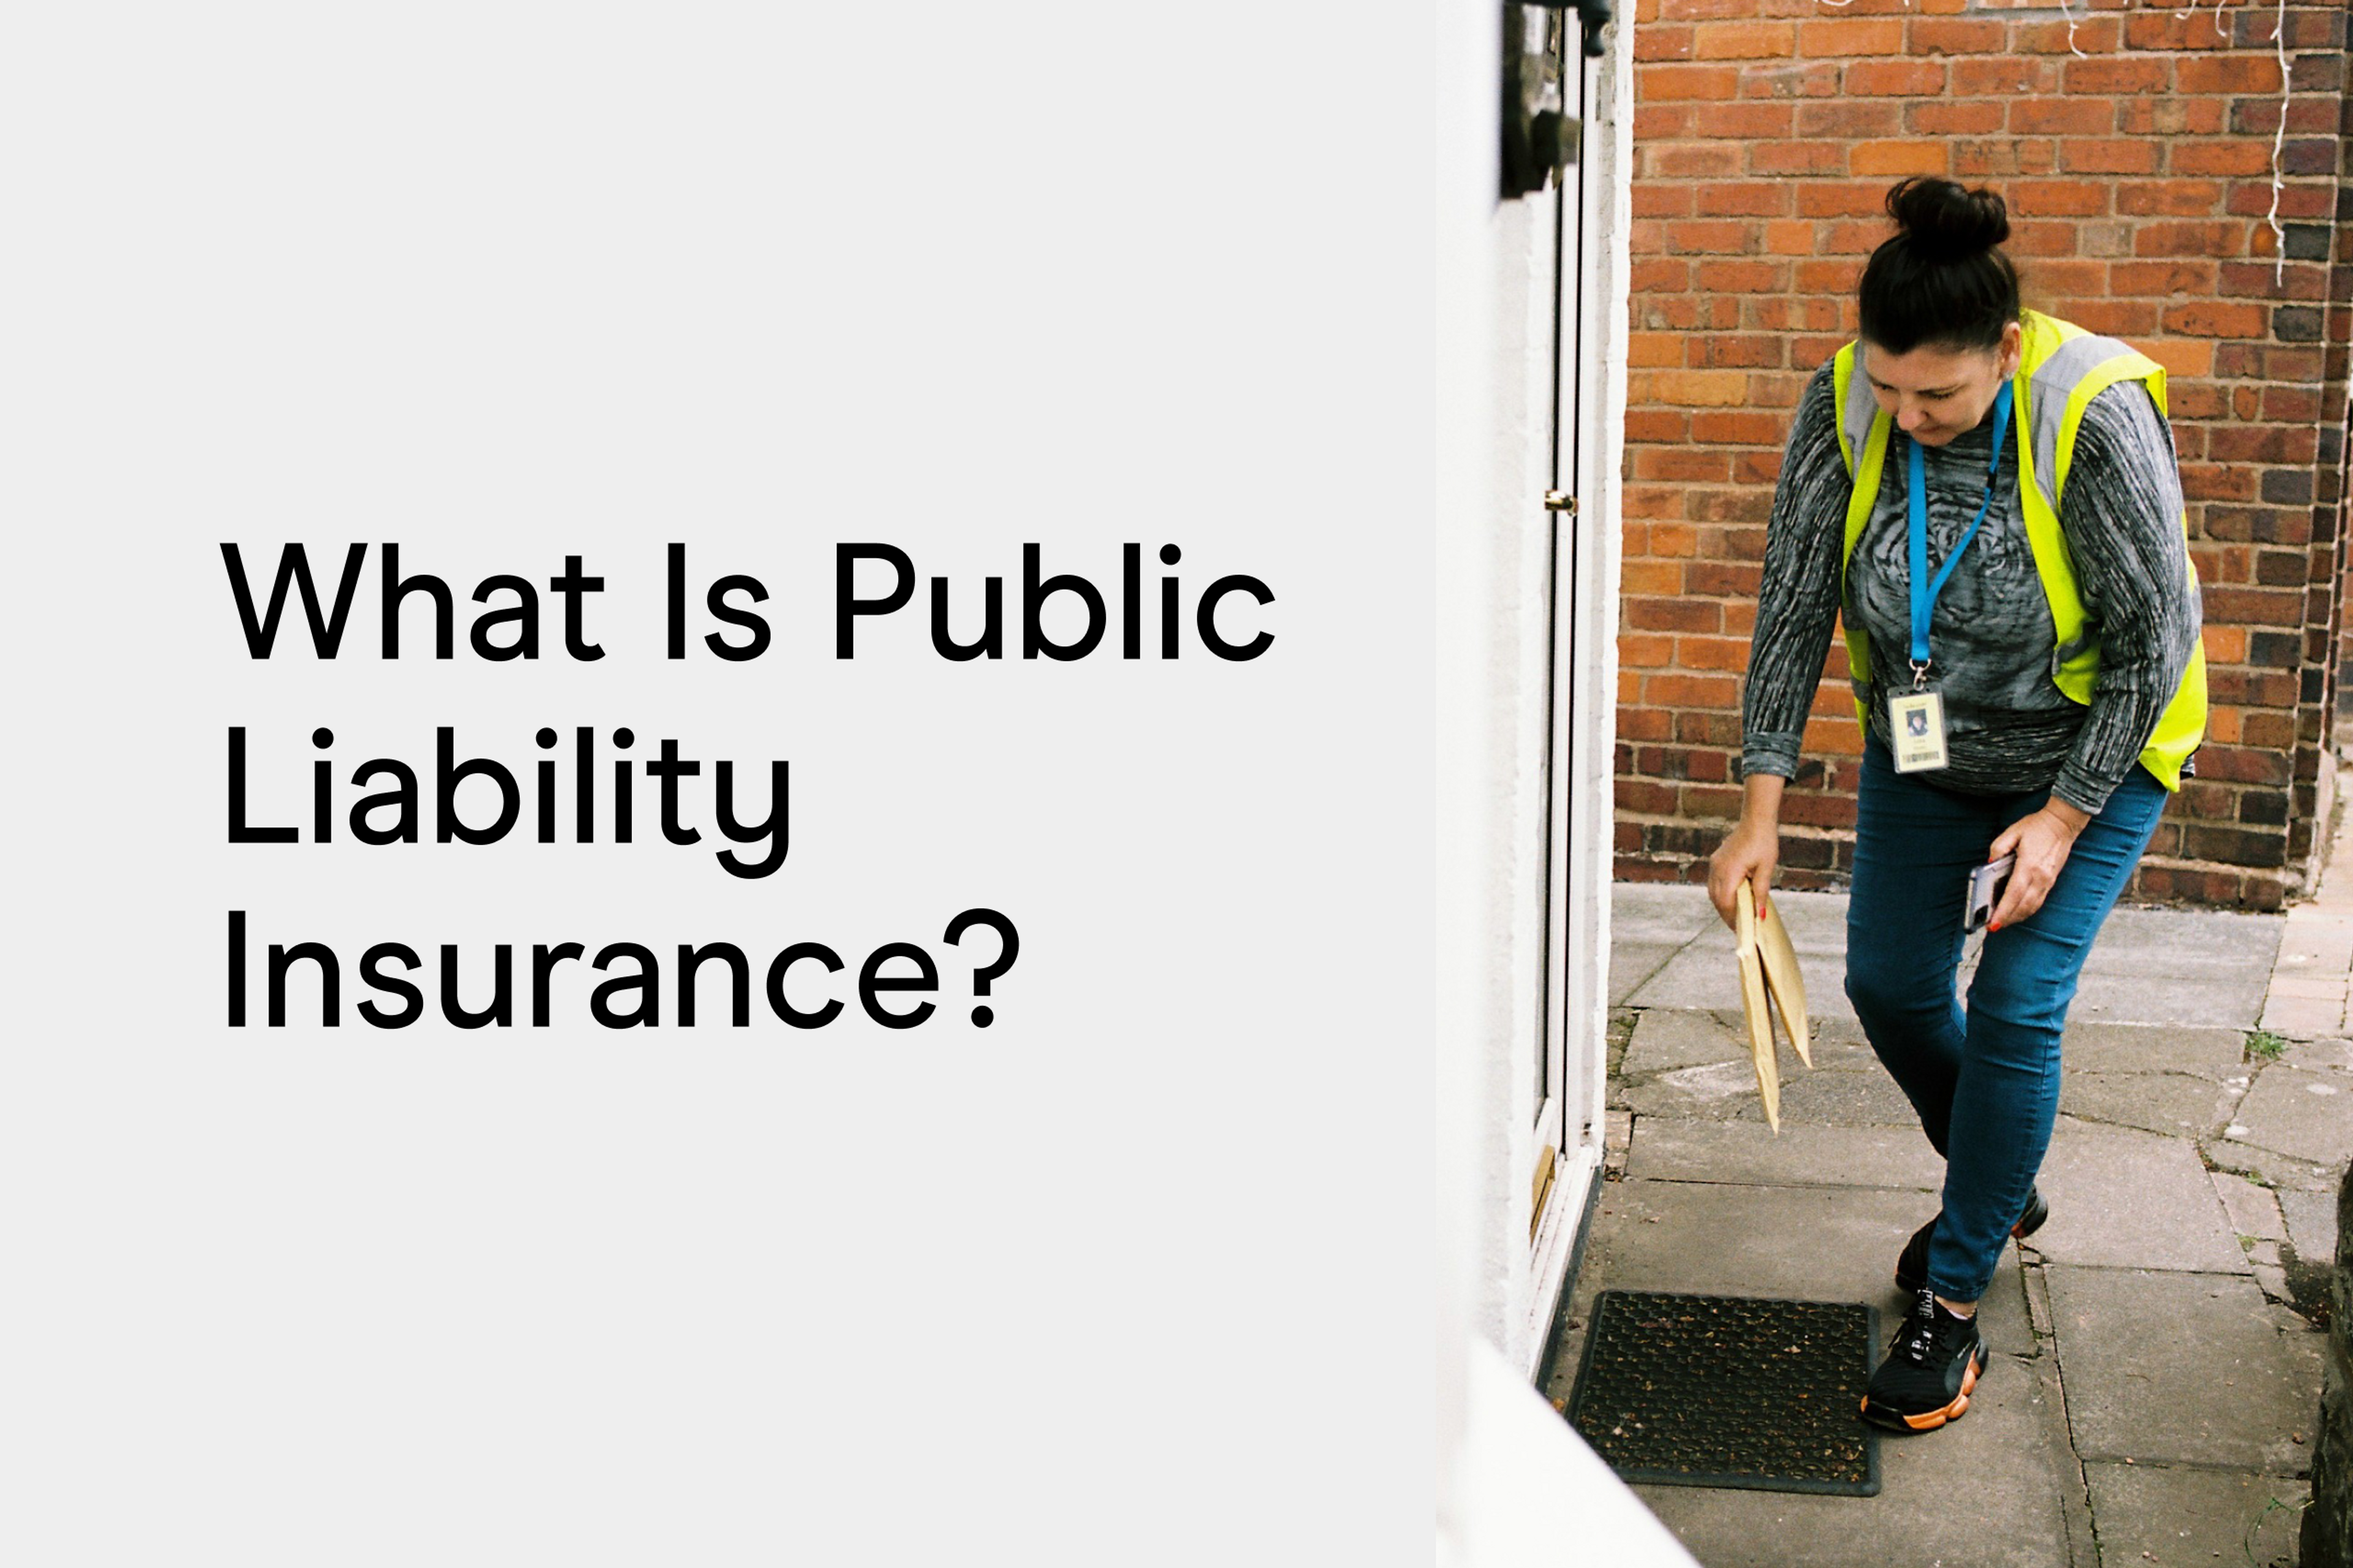 public liability insurance guide